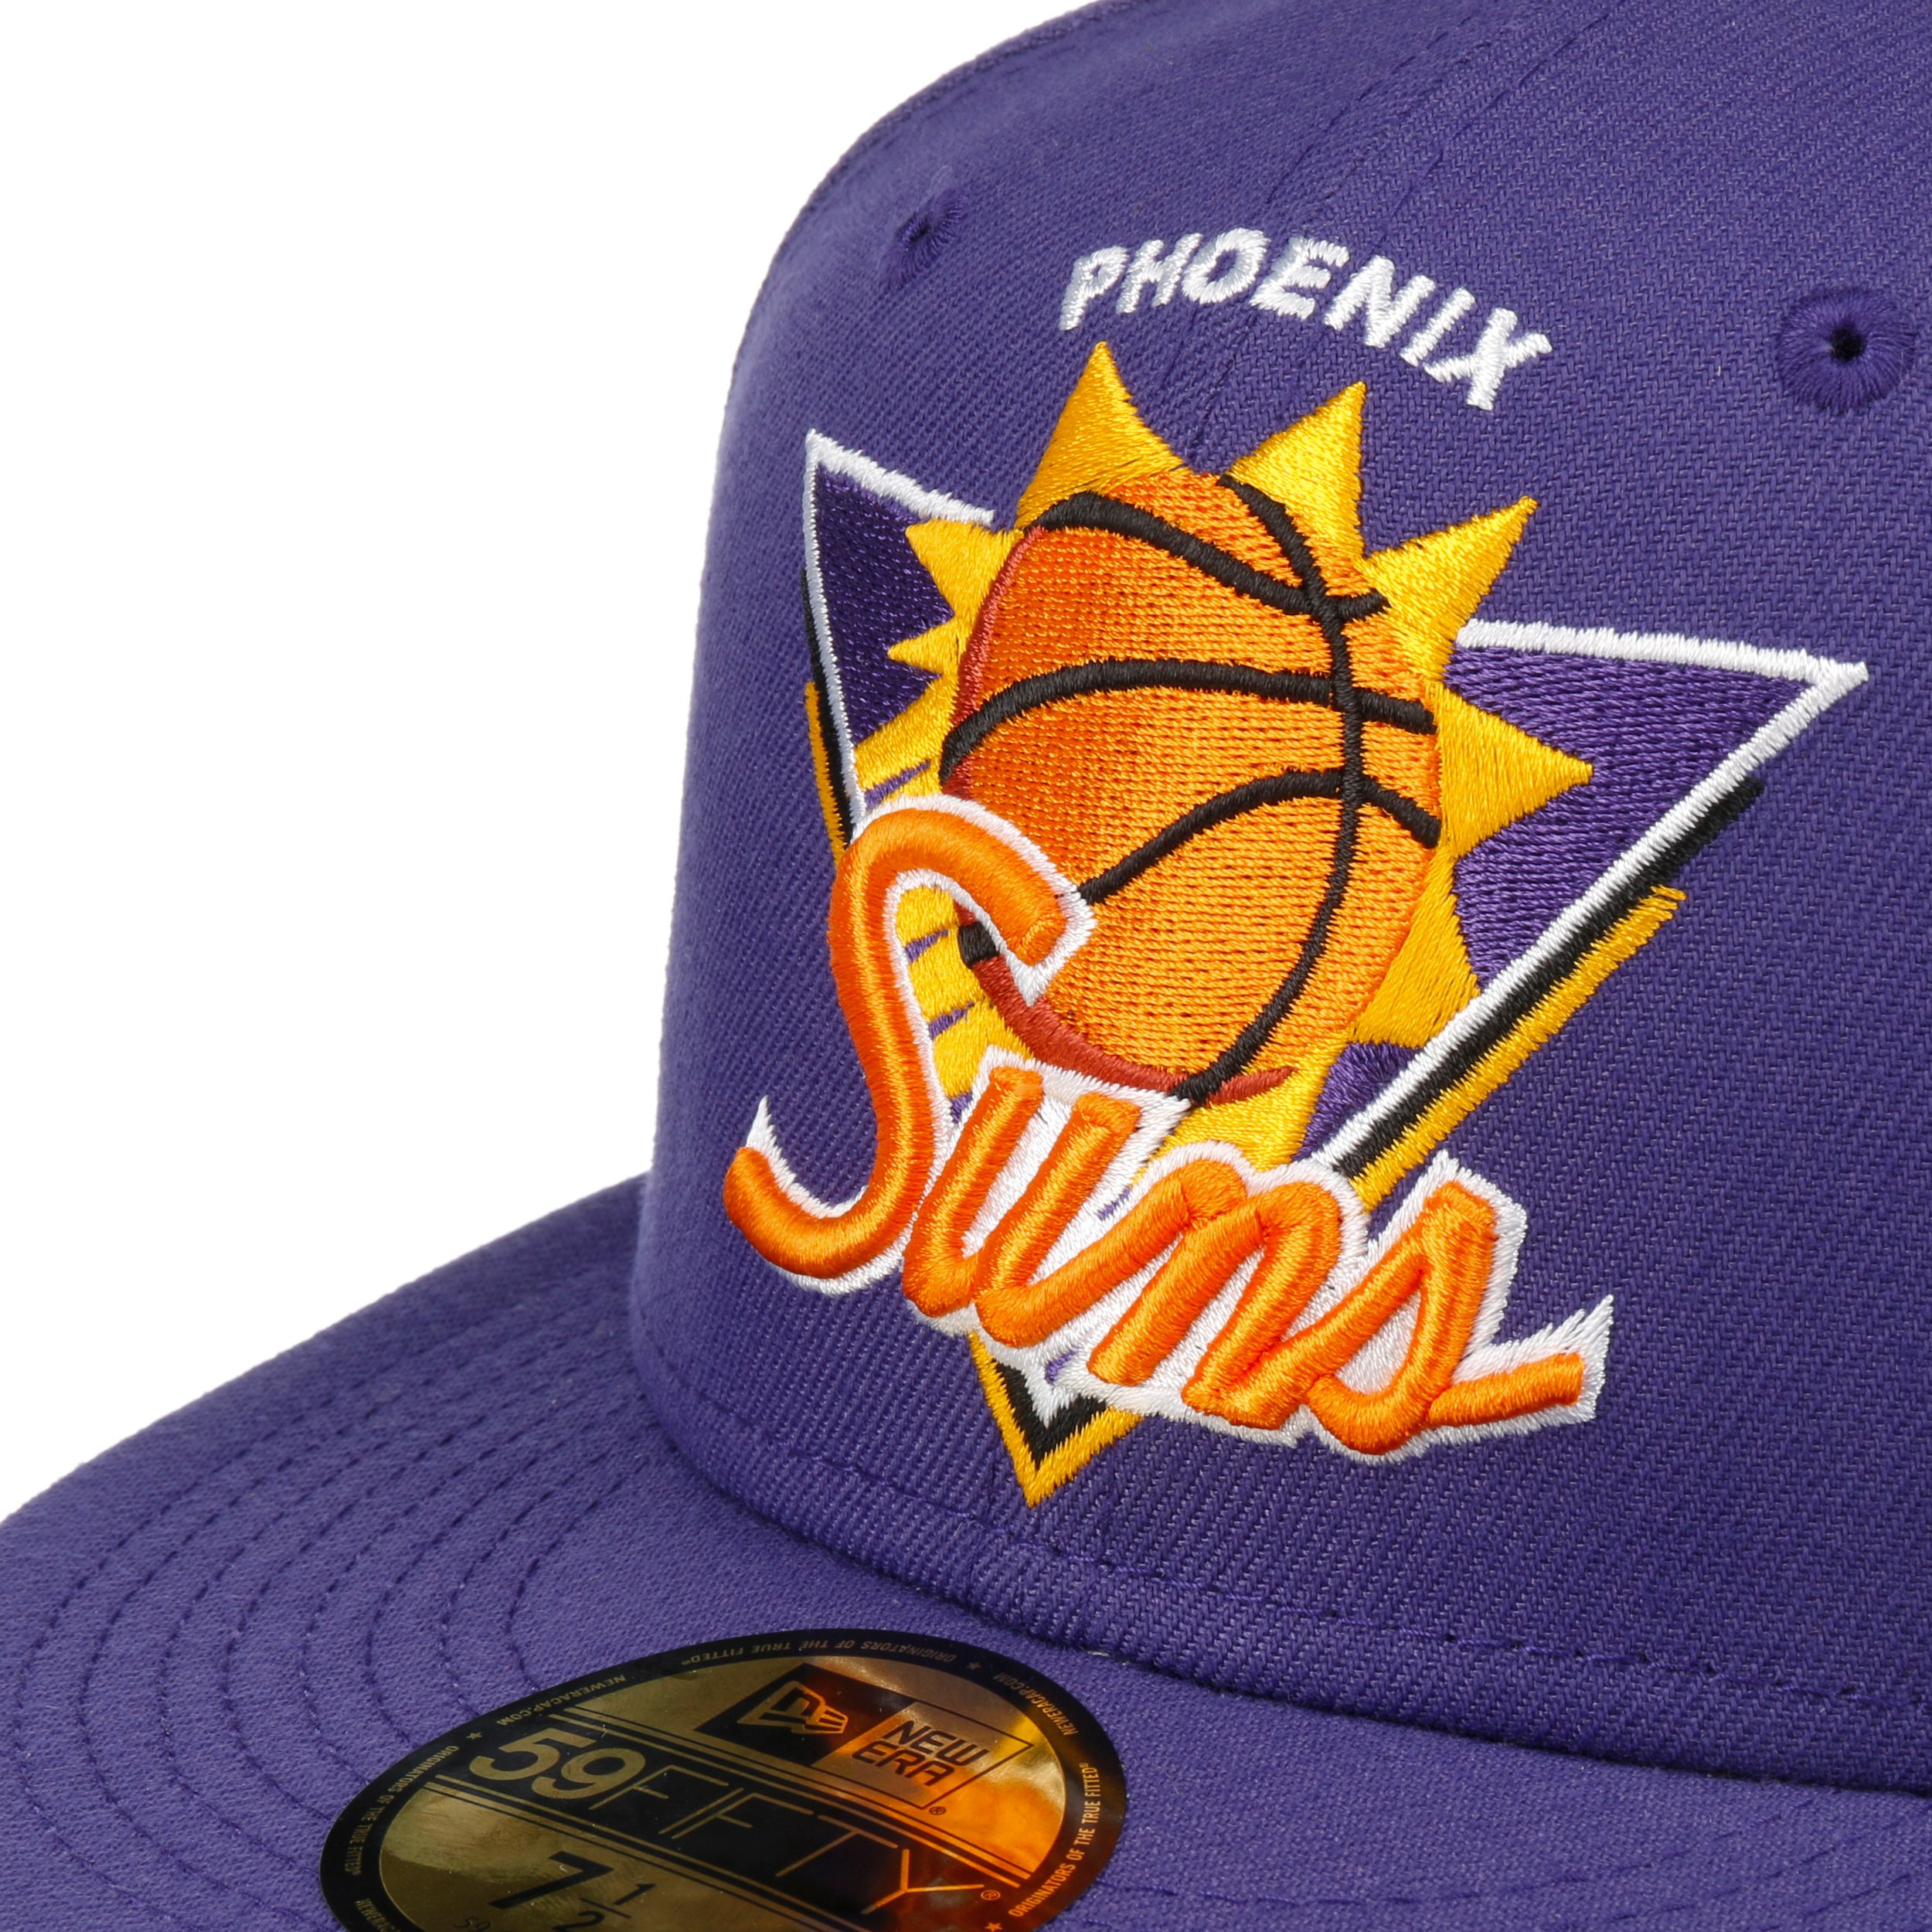 Phoenix Suns Hats, Suns Snapbacks, Fitted Hats, Beanies